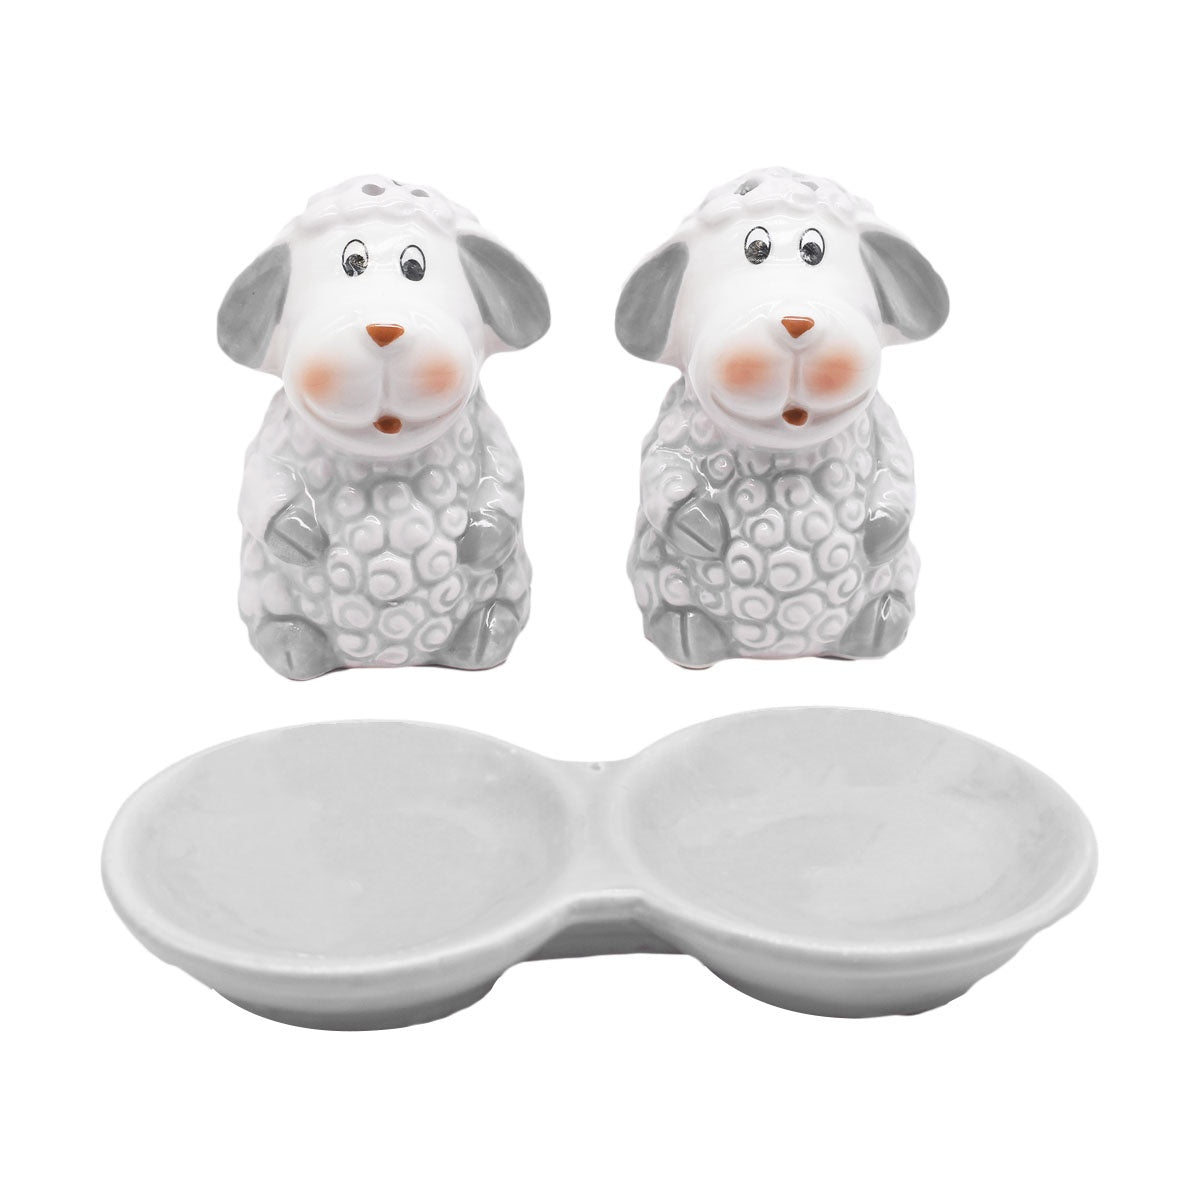 Ceramic Salt and Pepper Set with tray, Sheep Design, Grey (8563)